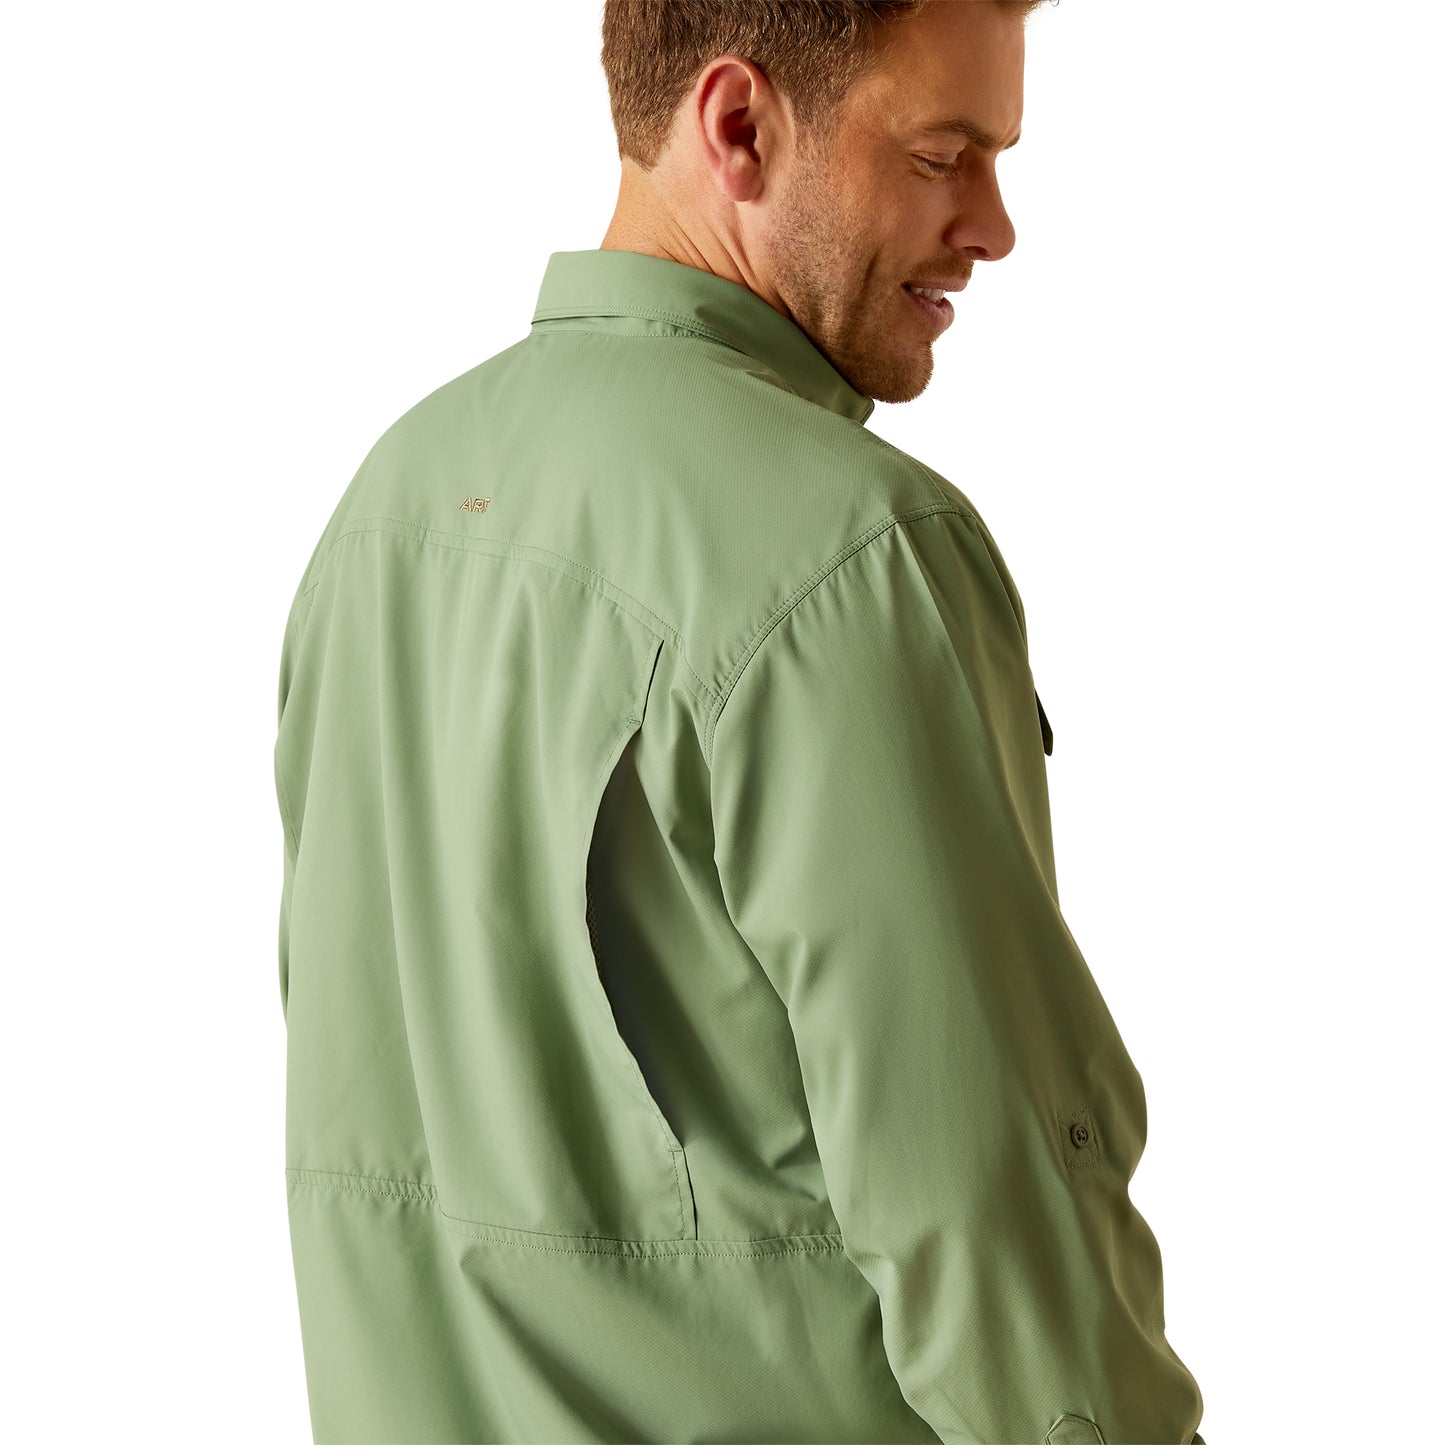 Ariat Men's VentTEK Outbound Parsley Green Classic Fit Shirt 10049014